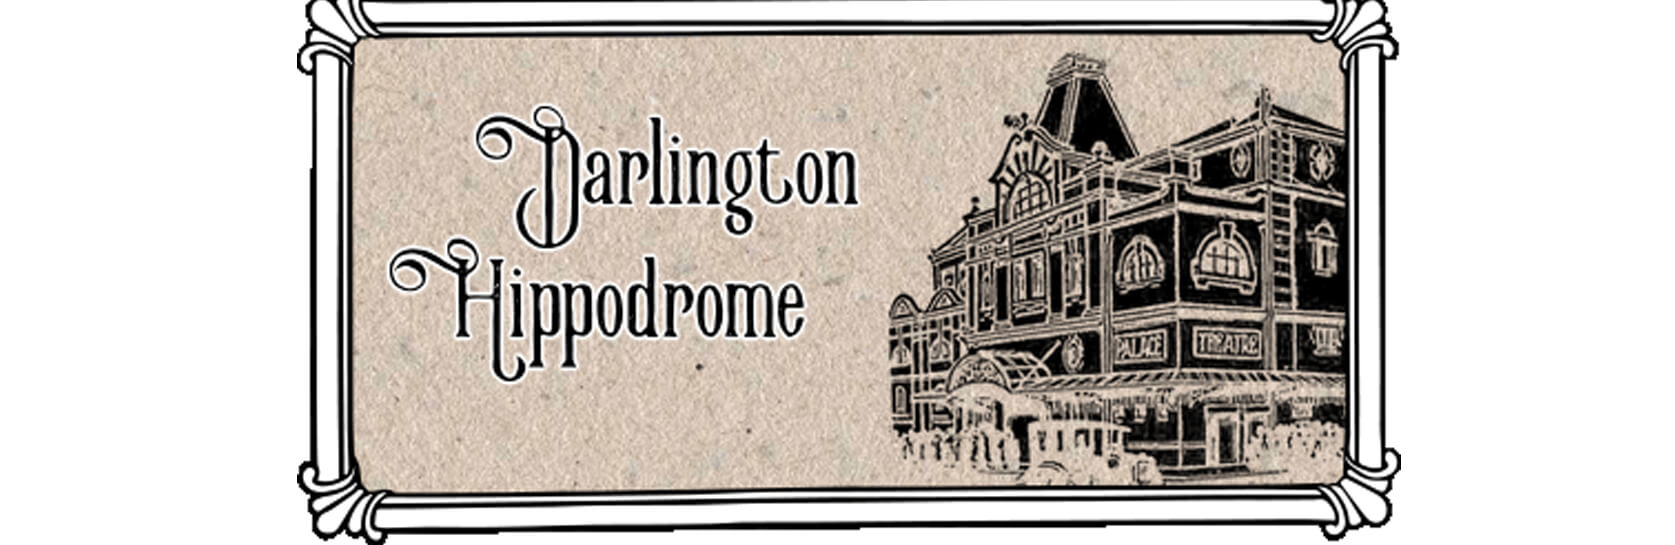 Darlington Hippodrome Read and Explain  - Topic 2 - Darlington Hippodrome